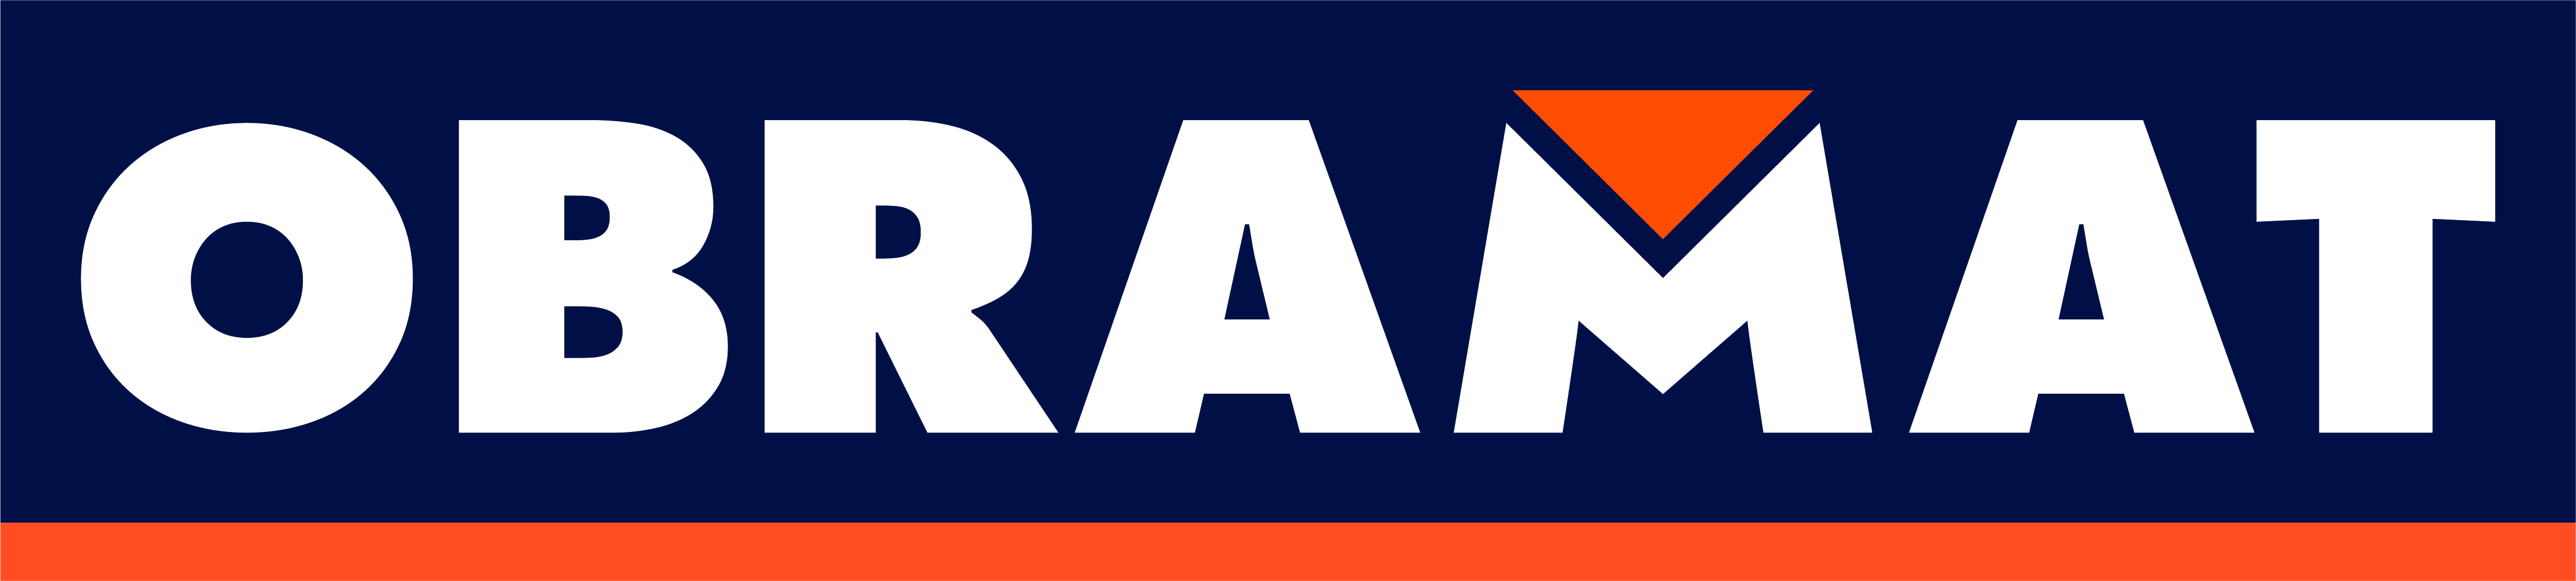 Logo de Obramat